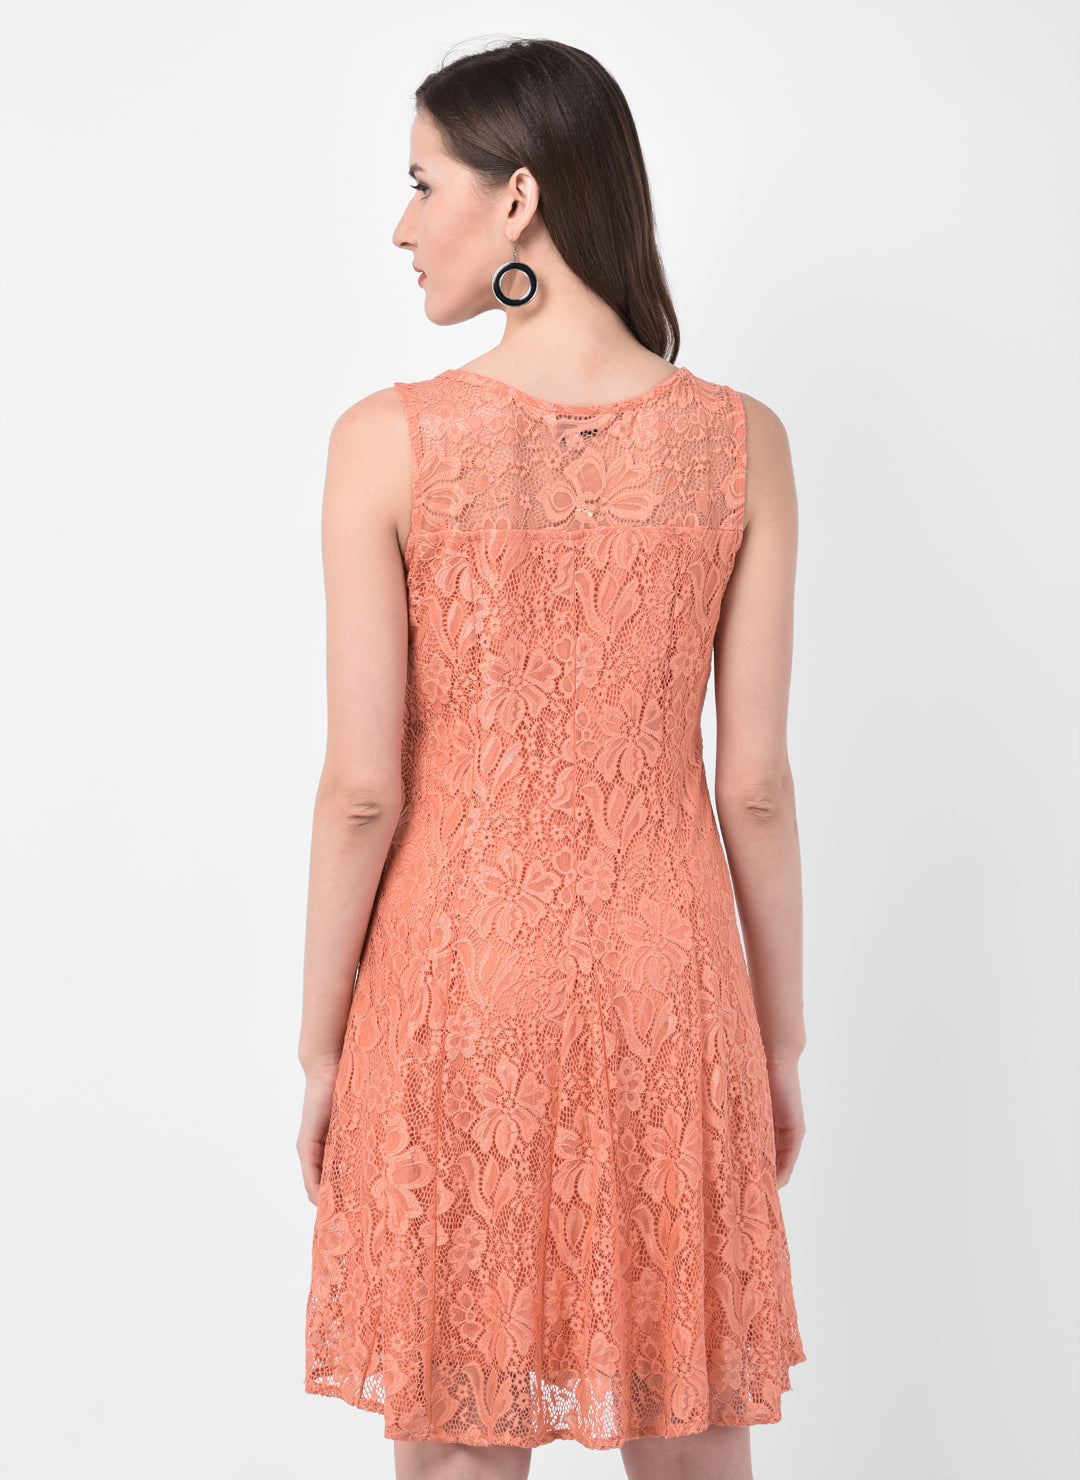 Coral Sleeveless A-Line Dress